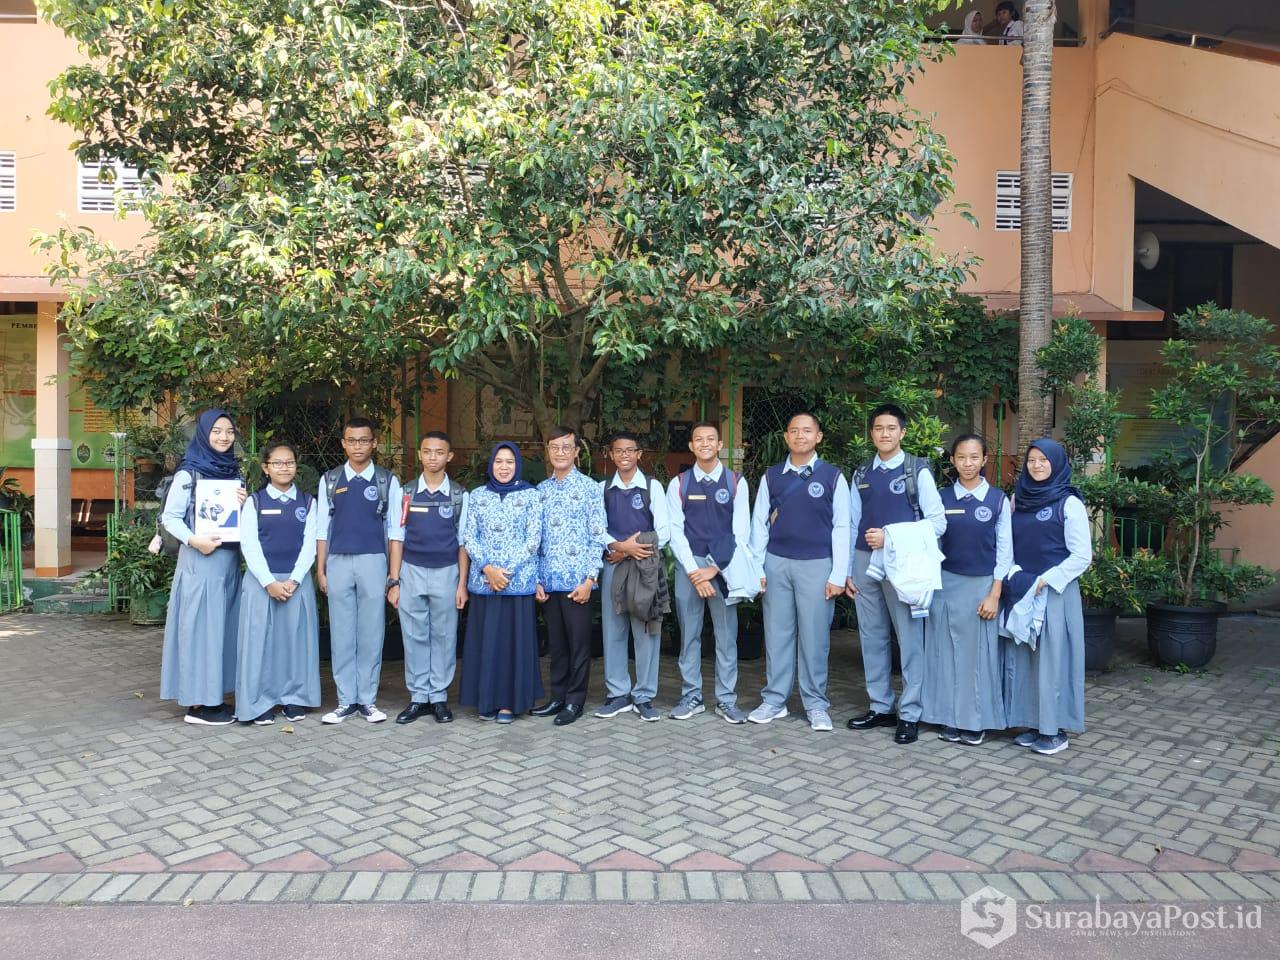 Para siswa SMA Pradita pose bersama usai sosialisasi di SMPN 3 Kota Malang.